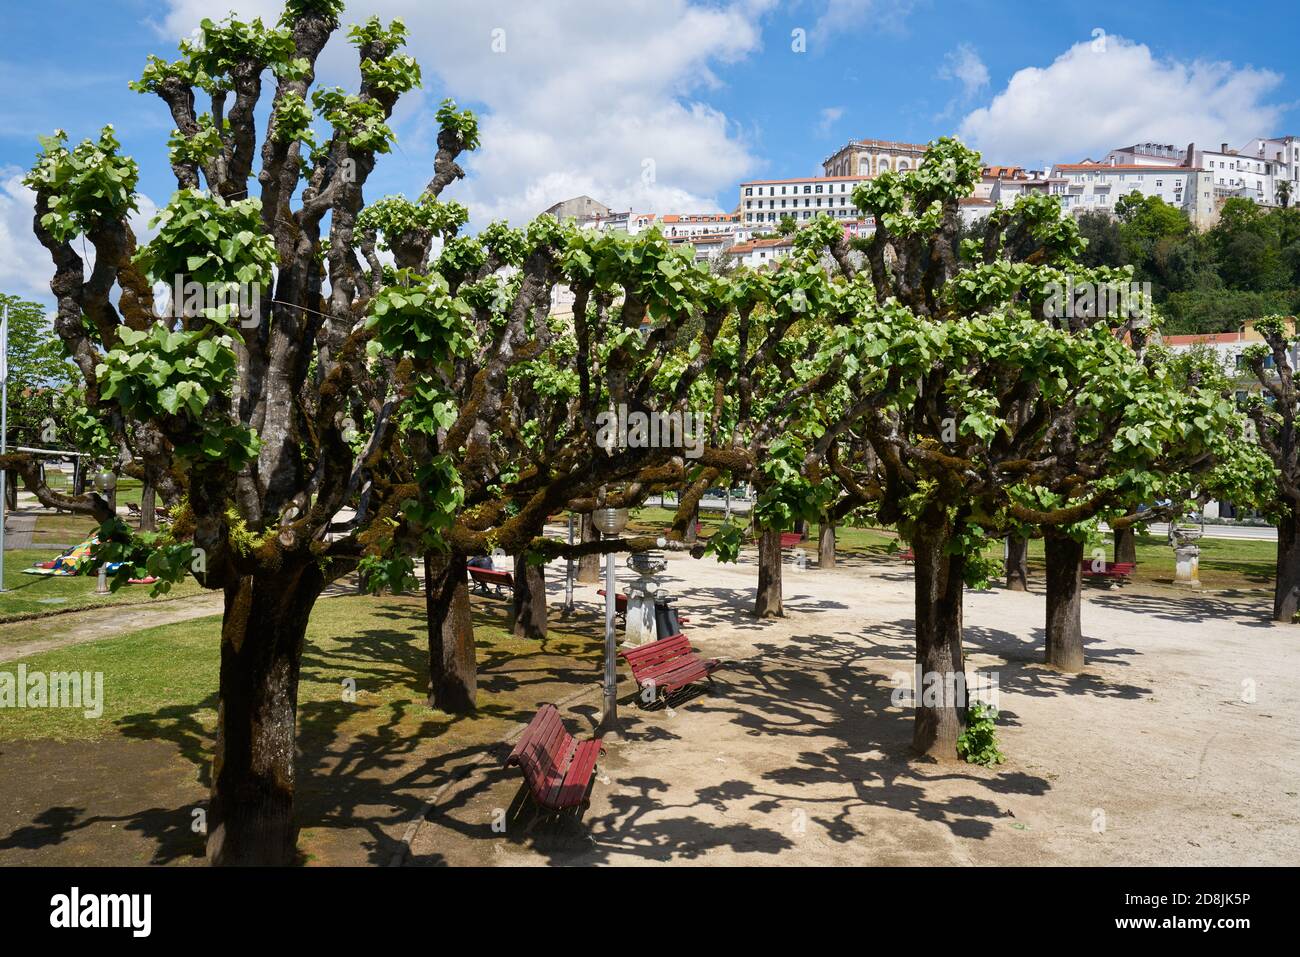 Manuel Braga Park in Coimbra, Portugal Stock Photo - Alamy